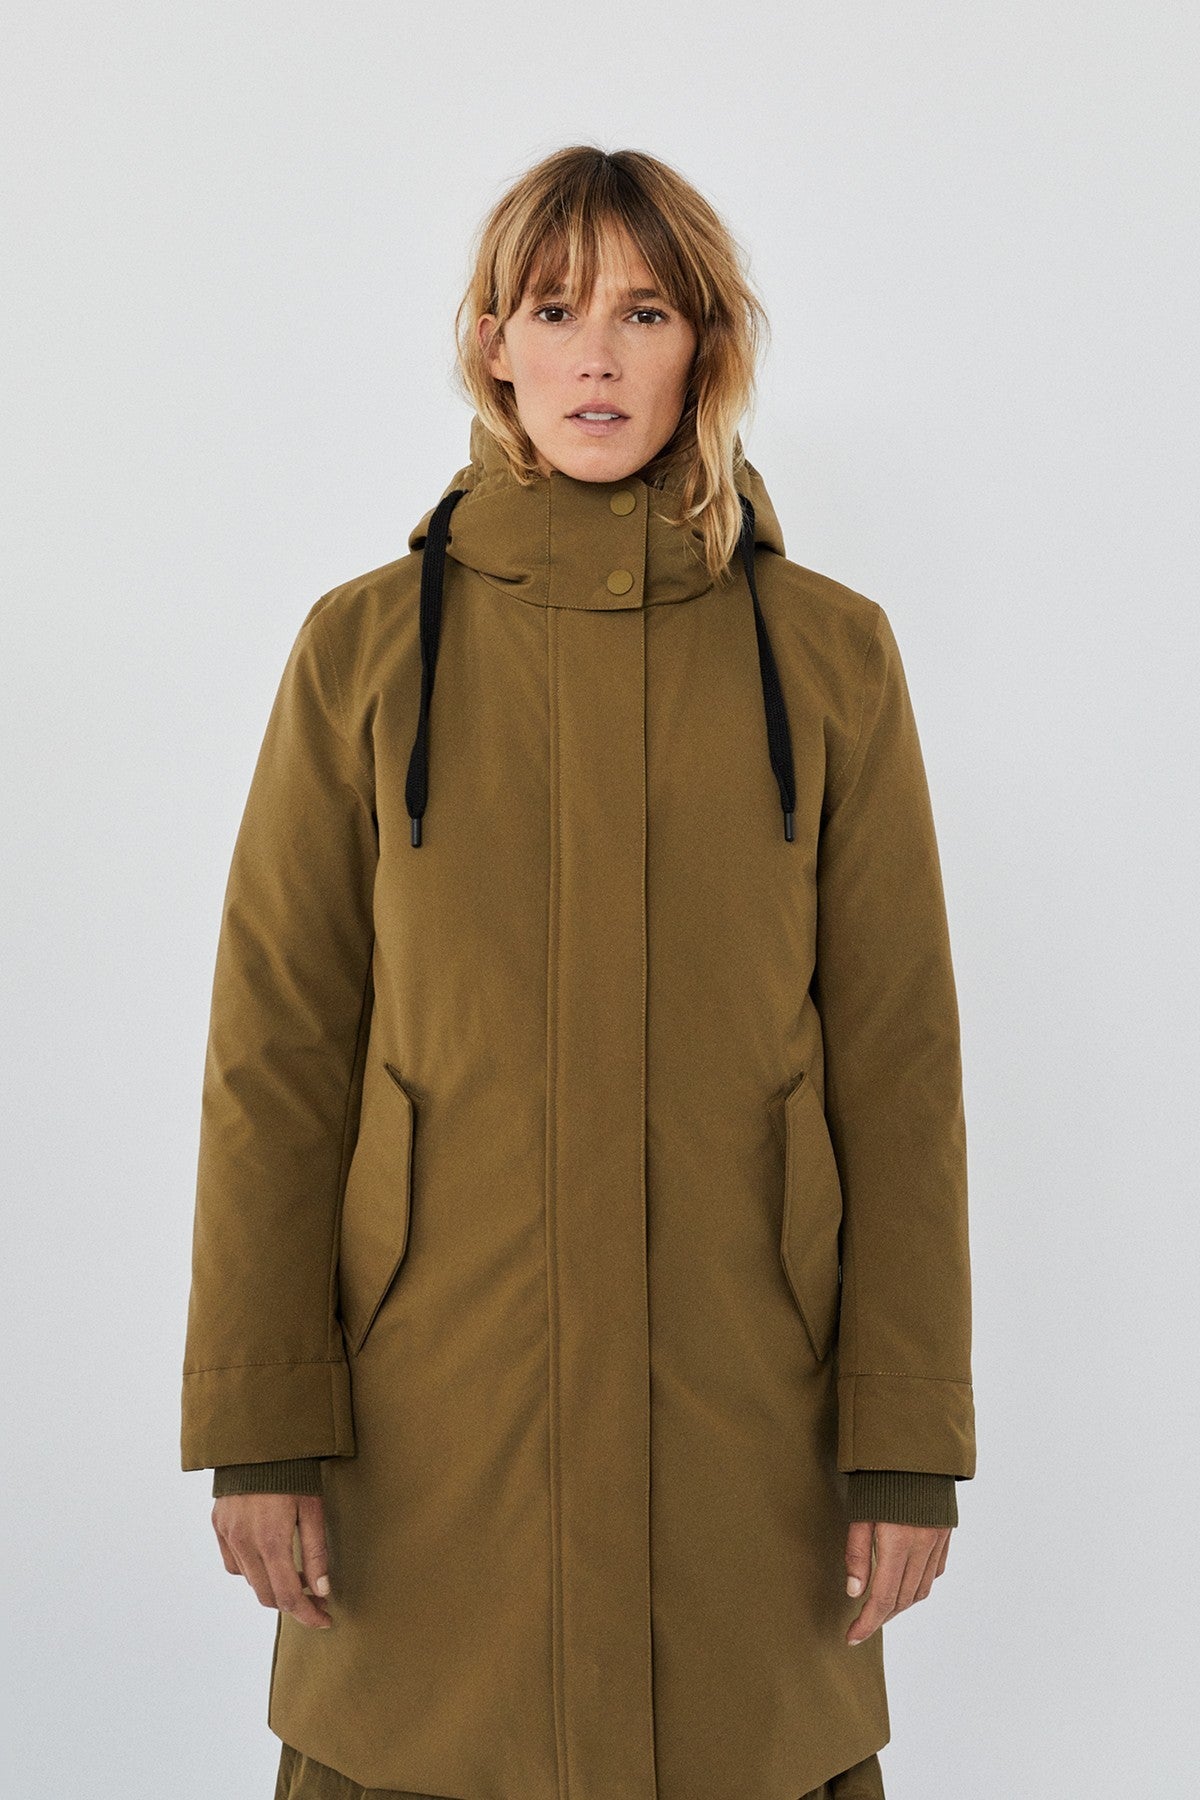 Ecoalf Glamalf Jacket - Abrigo Mujer, Comprar online